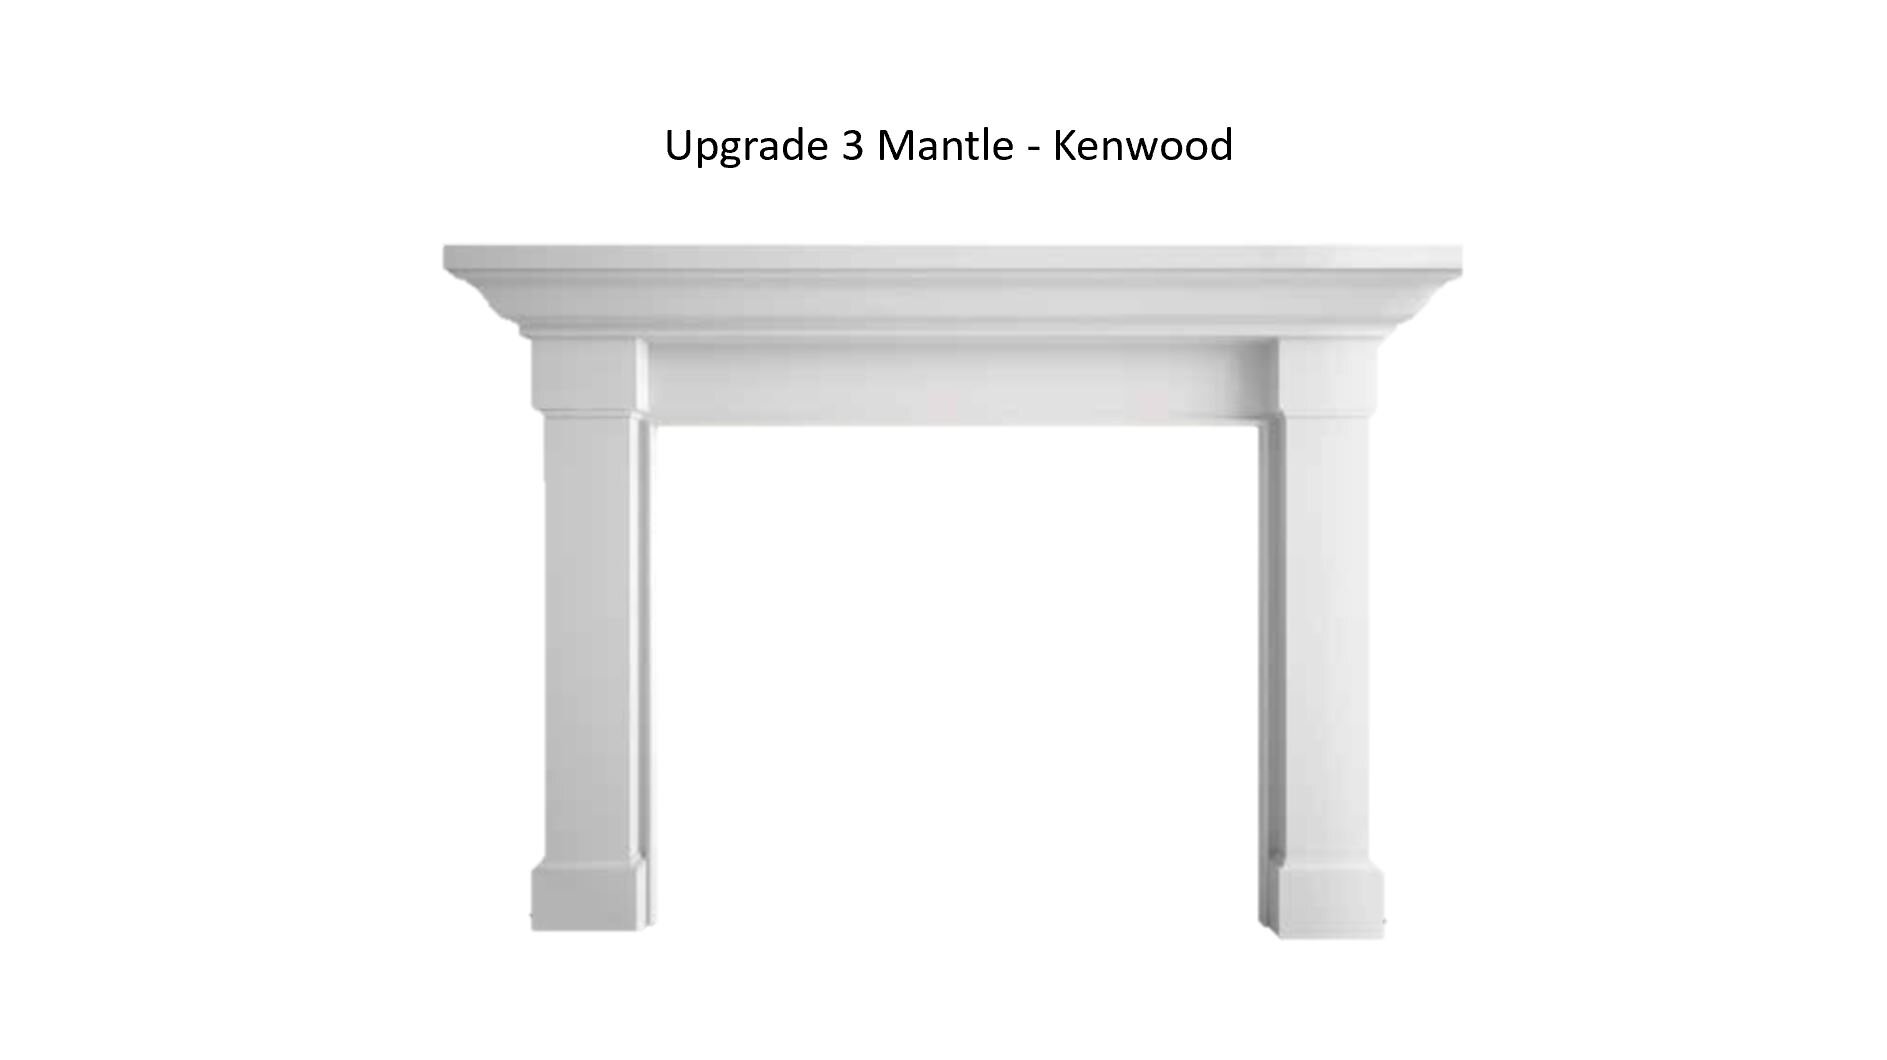 Upgrade 3 - Kenwood.JPG